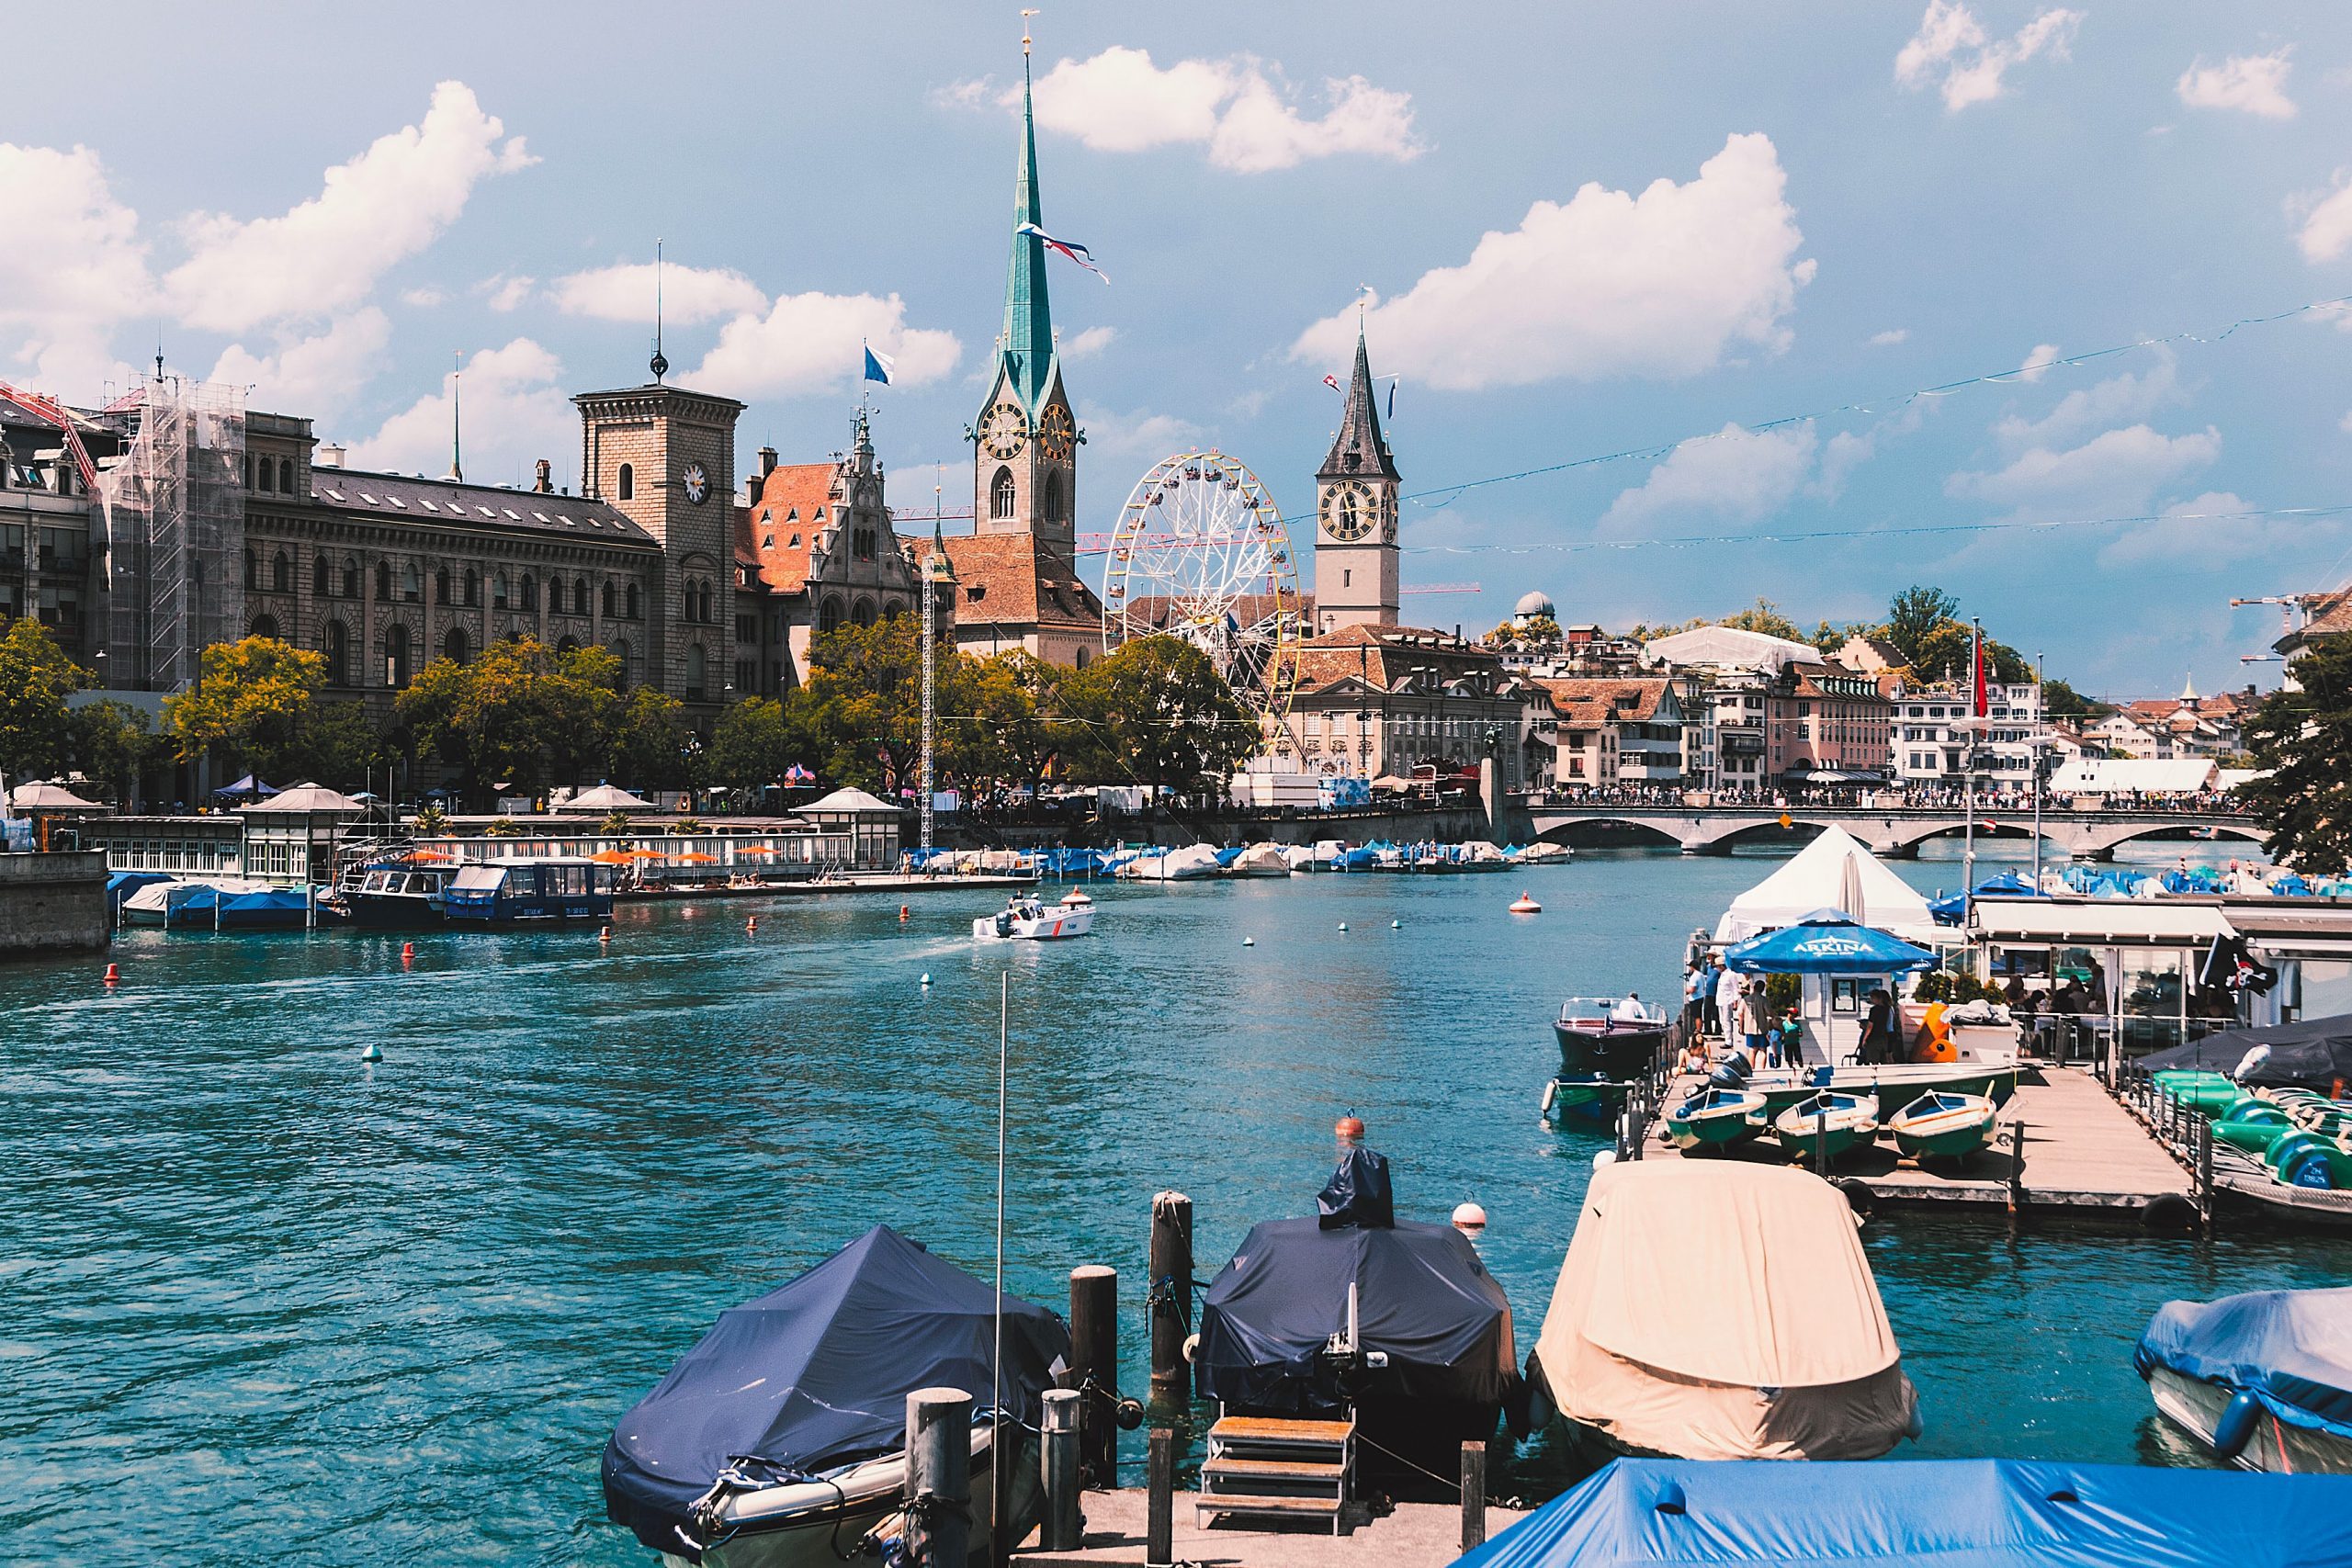 THE 20 BEST Things to Do in Zurich, Switzerland